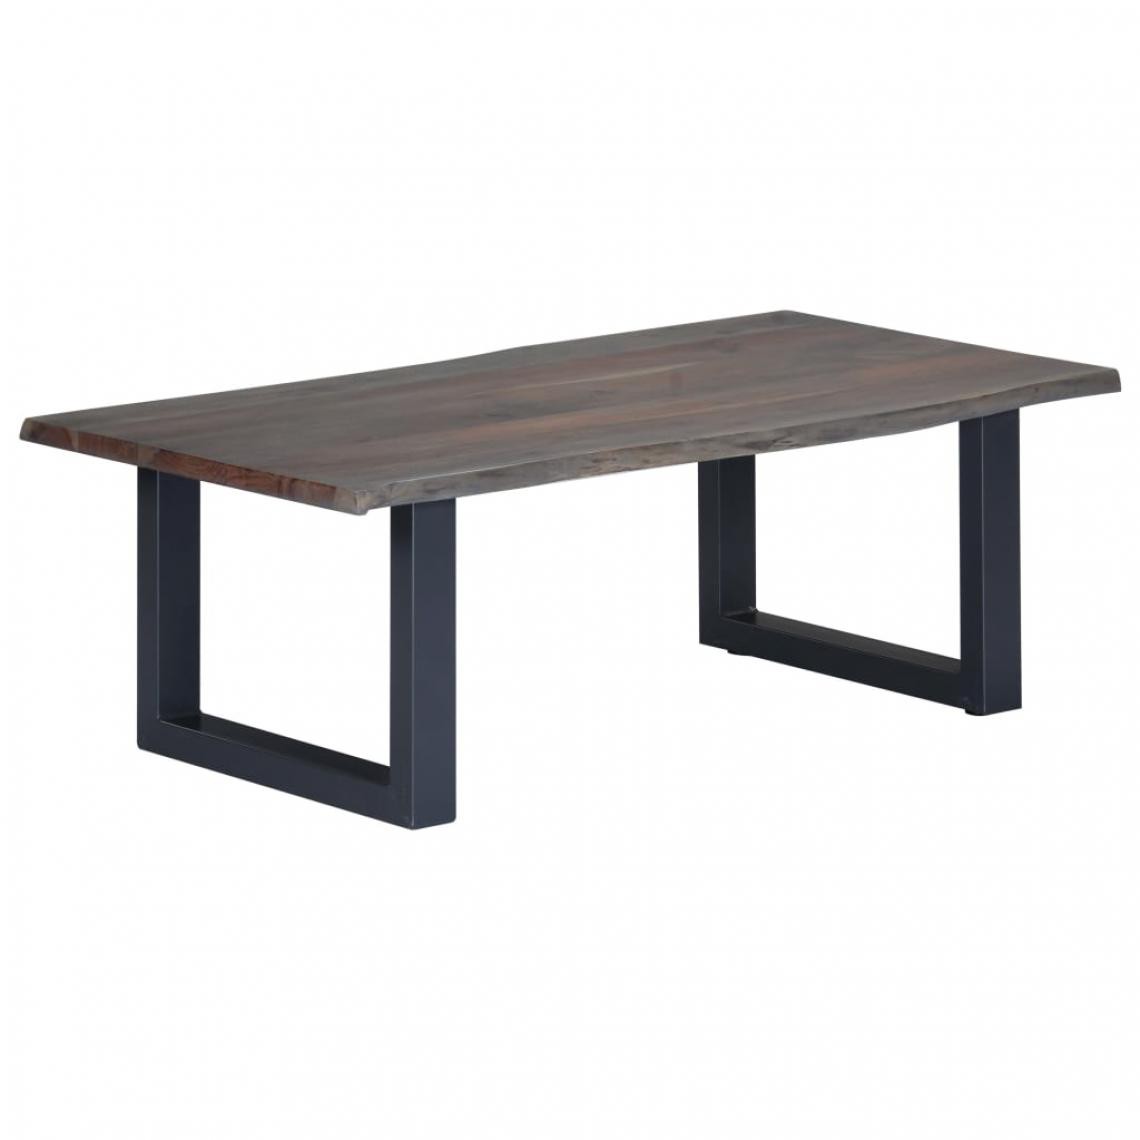 Vidaxl - vidaXL Table basse avec bord naturel Gris 115x60x40 cm Bois d'acacia - Tables à manger